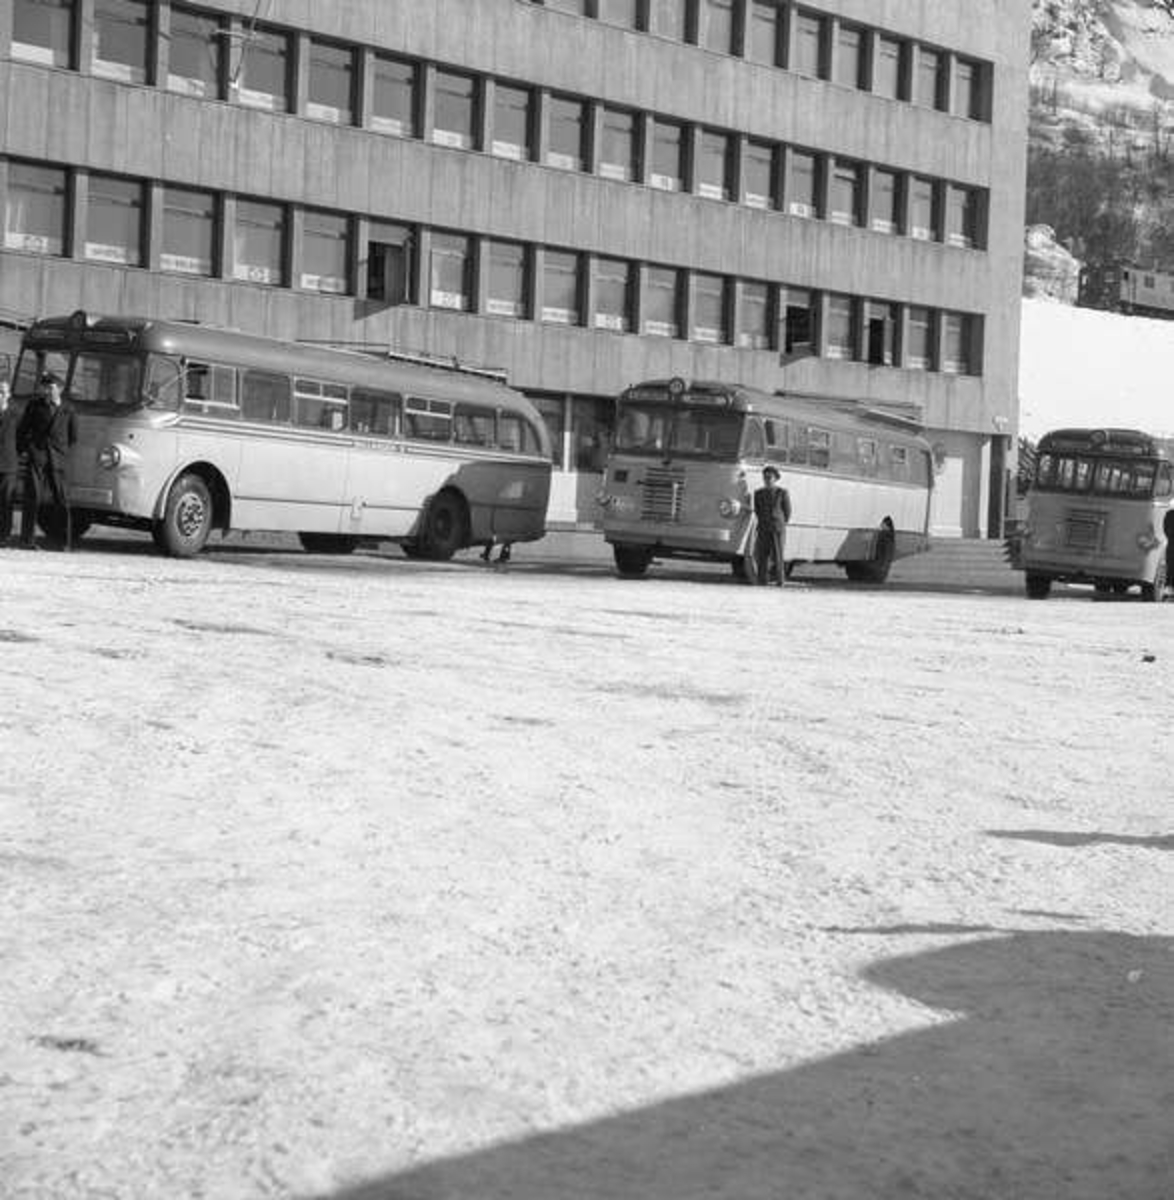 Ofoten Bilrutens busser ved havnens hus